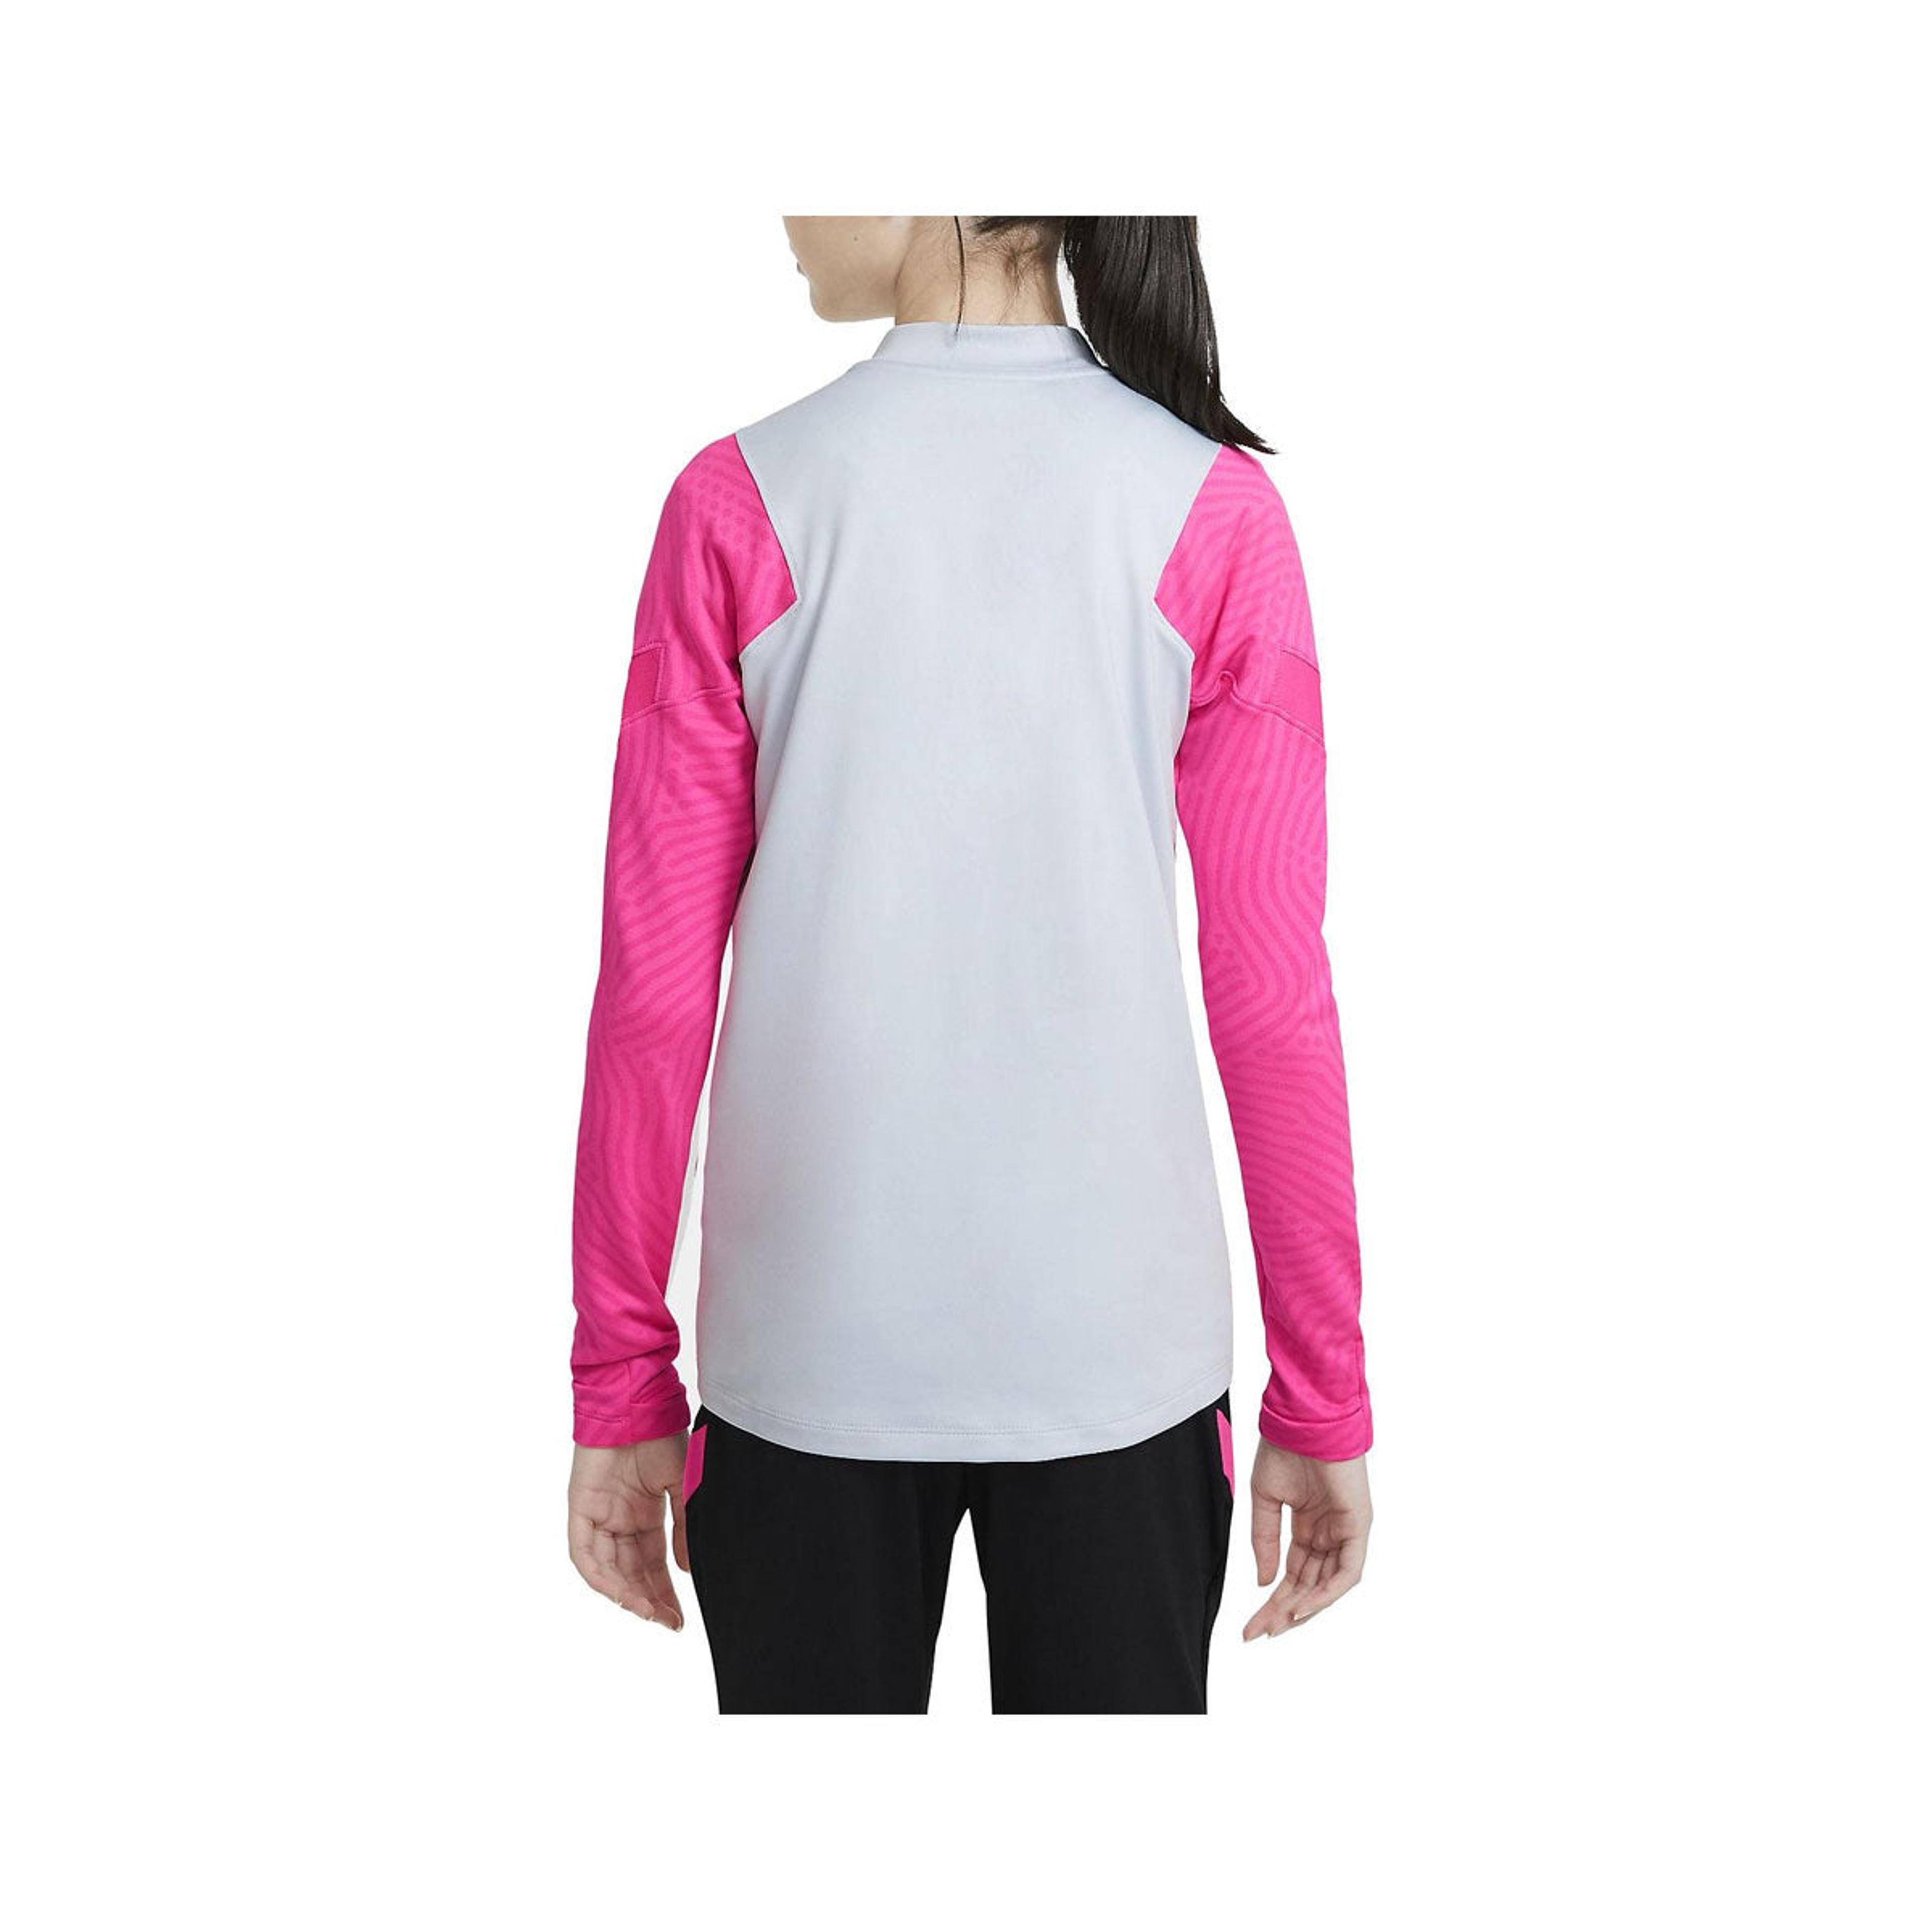 Alternate View 1 of Nike Girls PSG Long Sleeve Sweatshirt